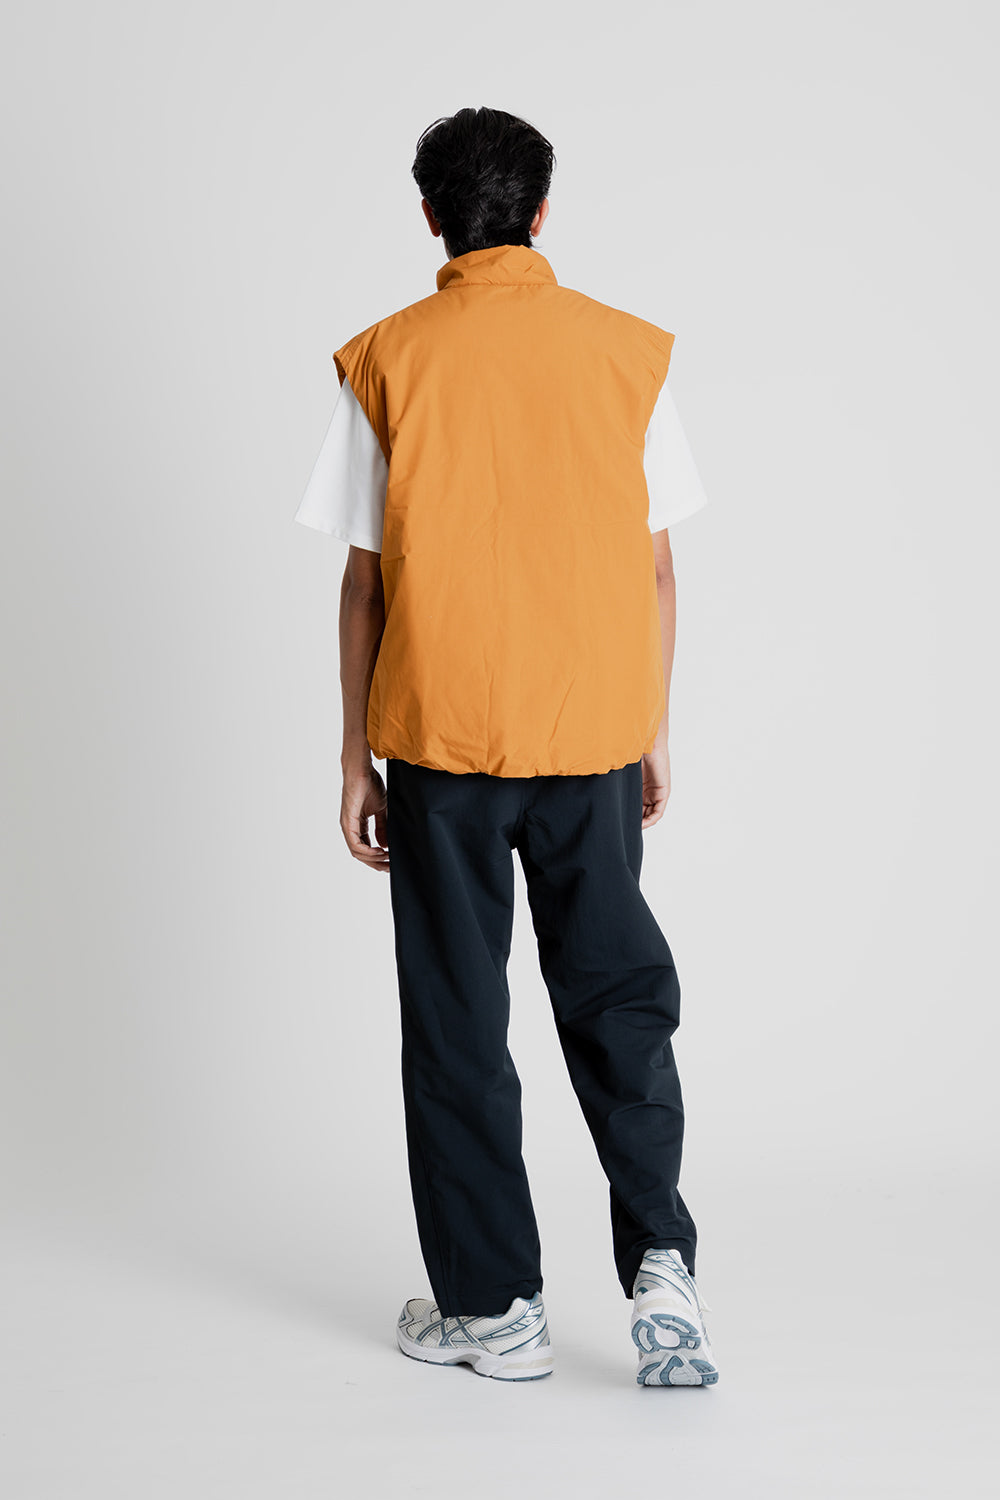 Nanamica Insulation Vest in Sunset